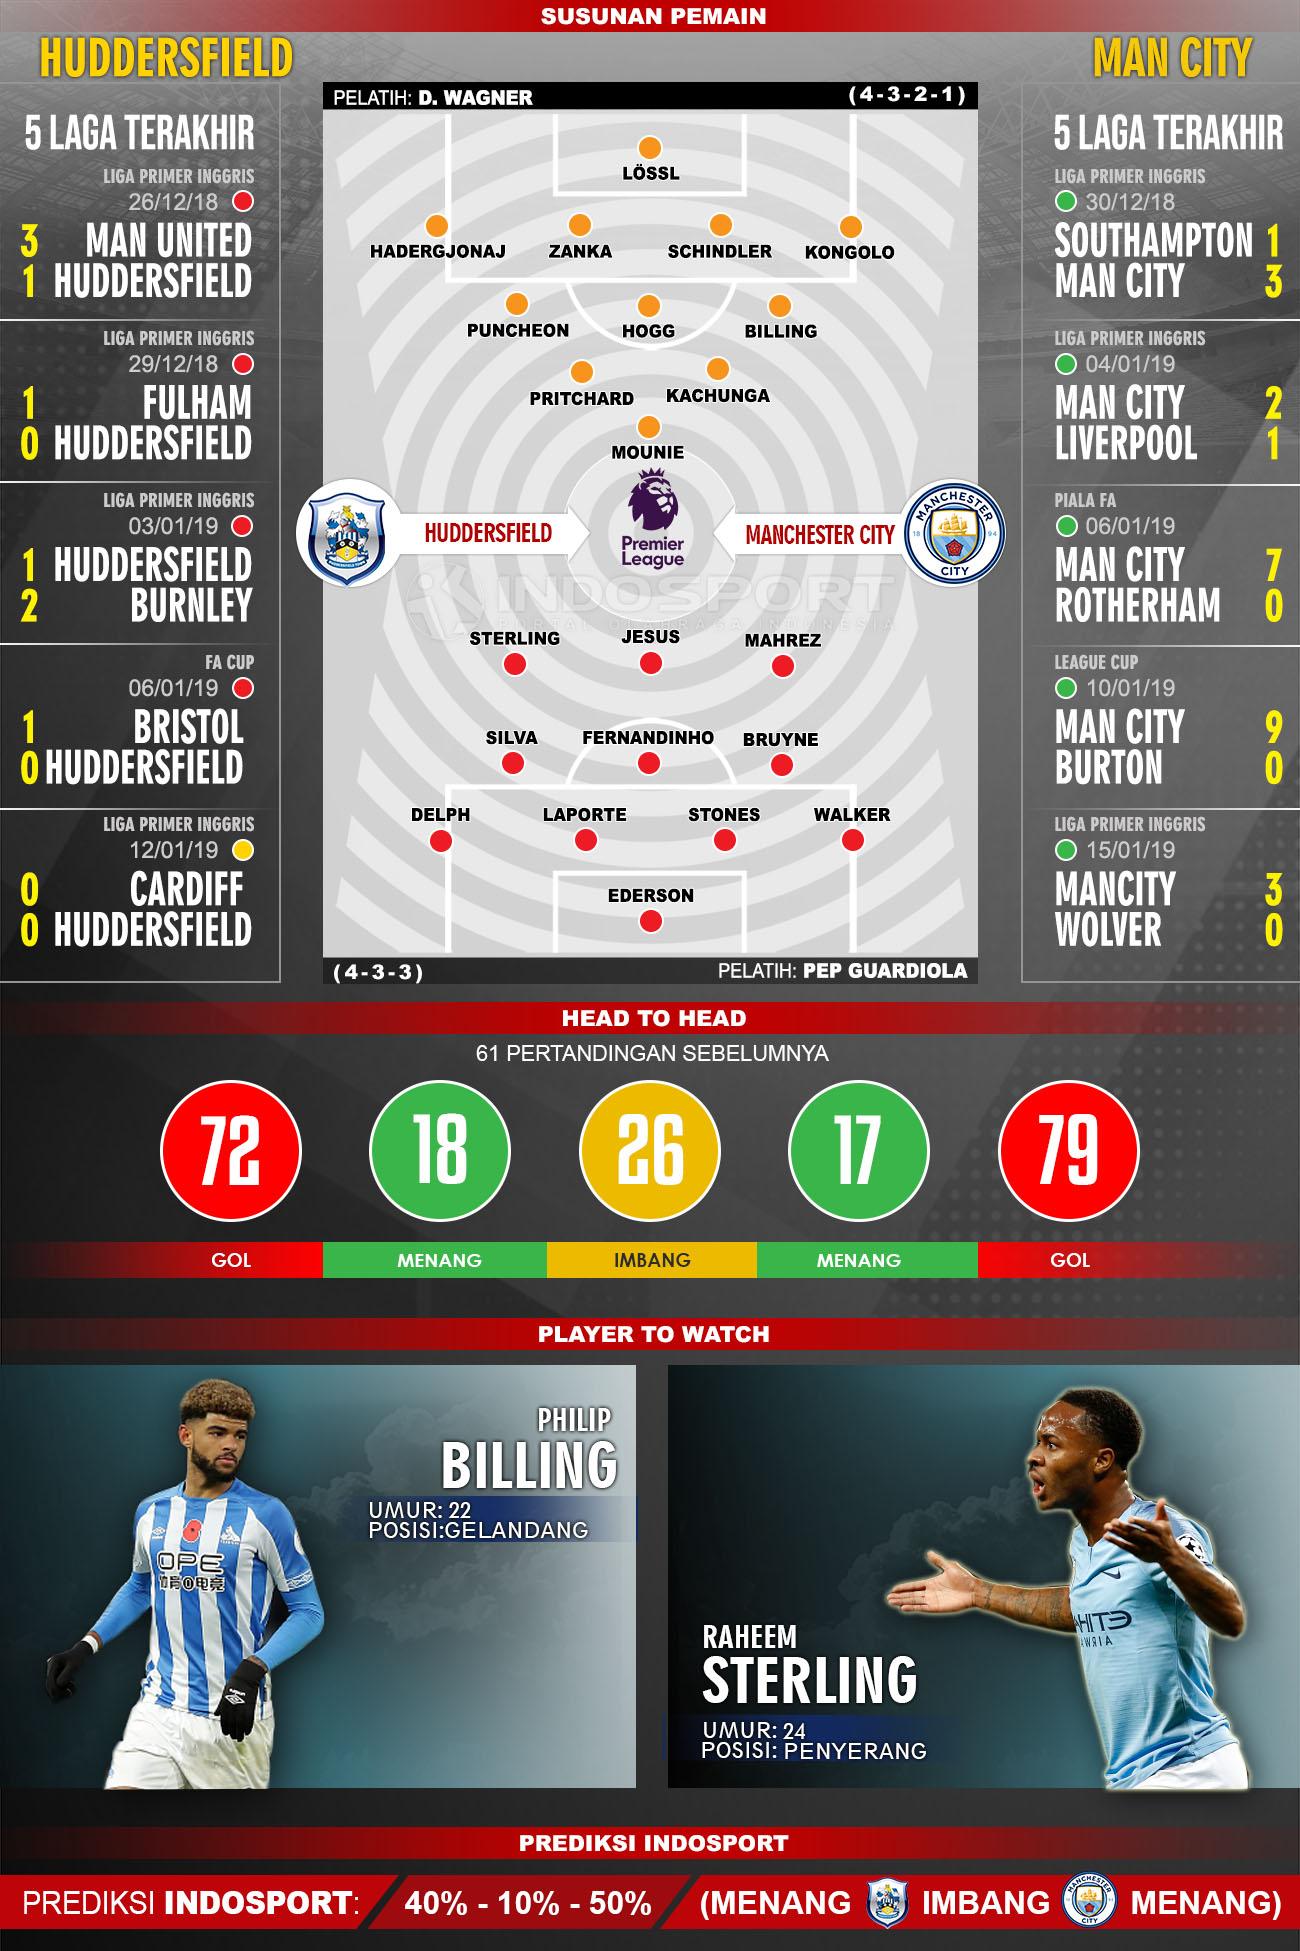 Susunan Pemain dan Lima Laga Terakhir Huddersfield Vs Manchester City. Copyright: INDOSPORT